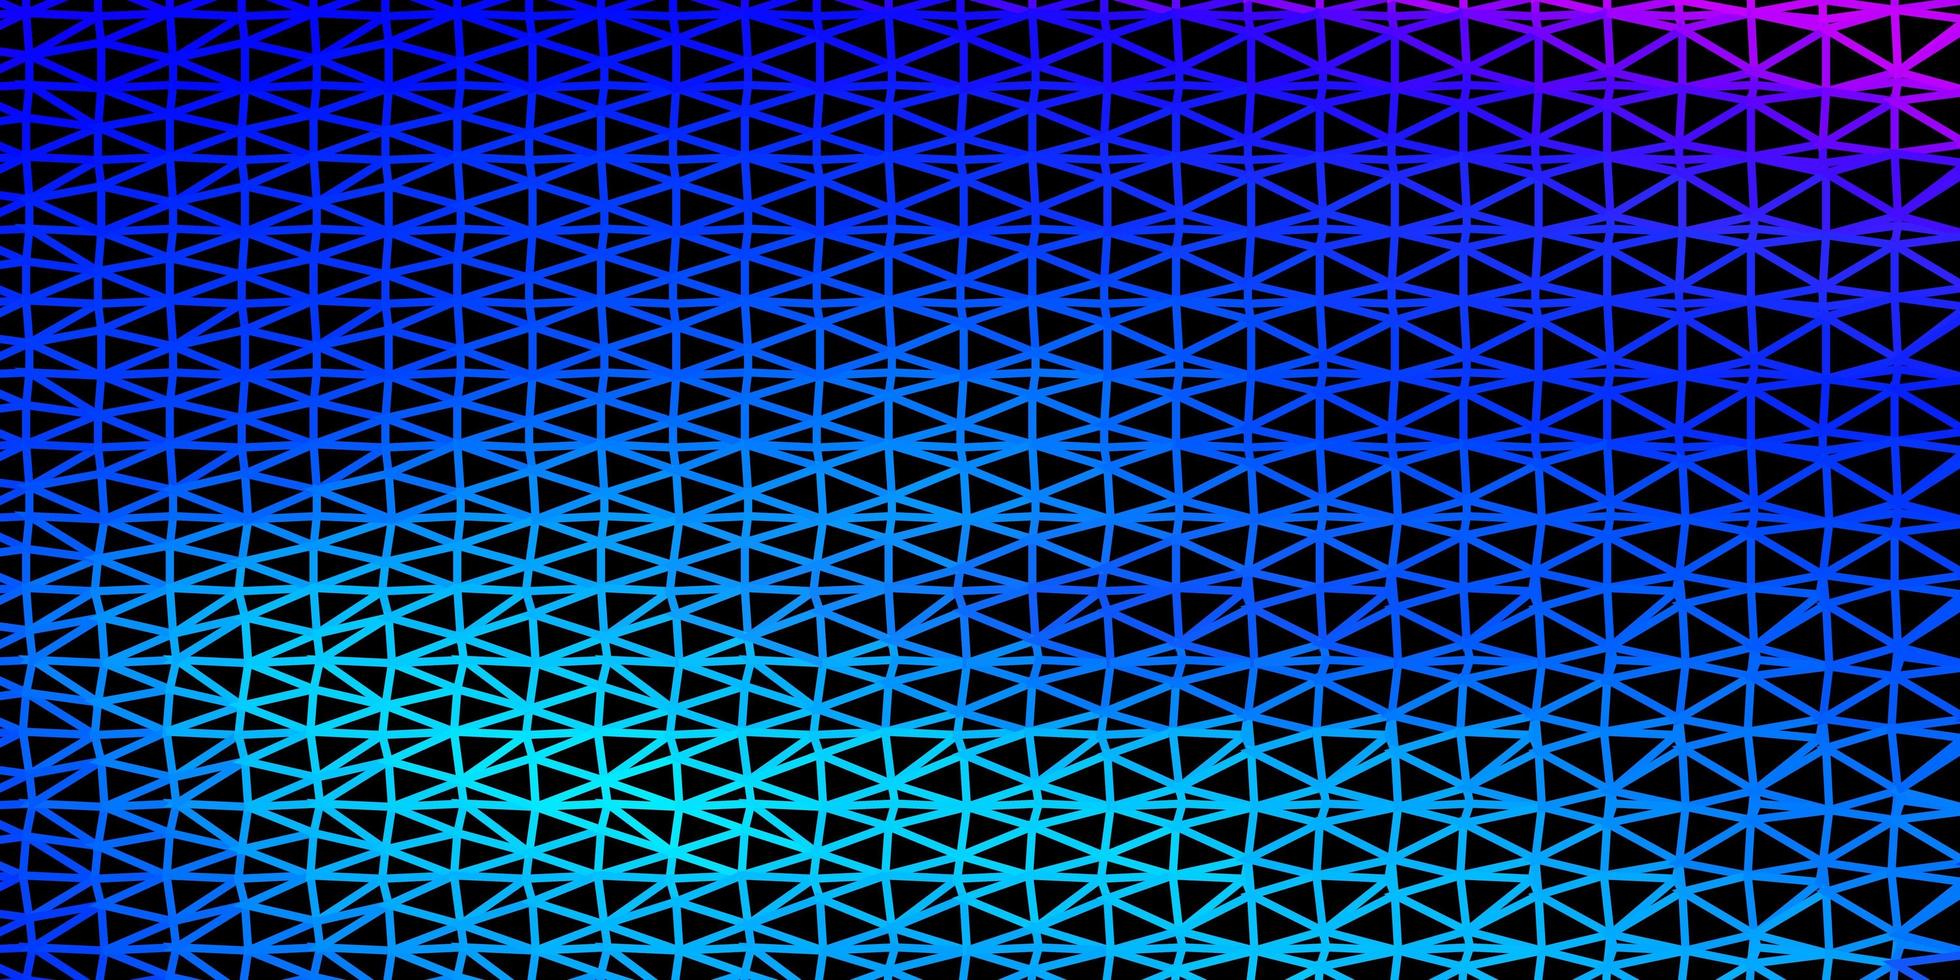 ljusrosa, blå vektor triangel mosaik bakgrund.